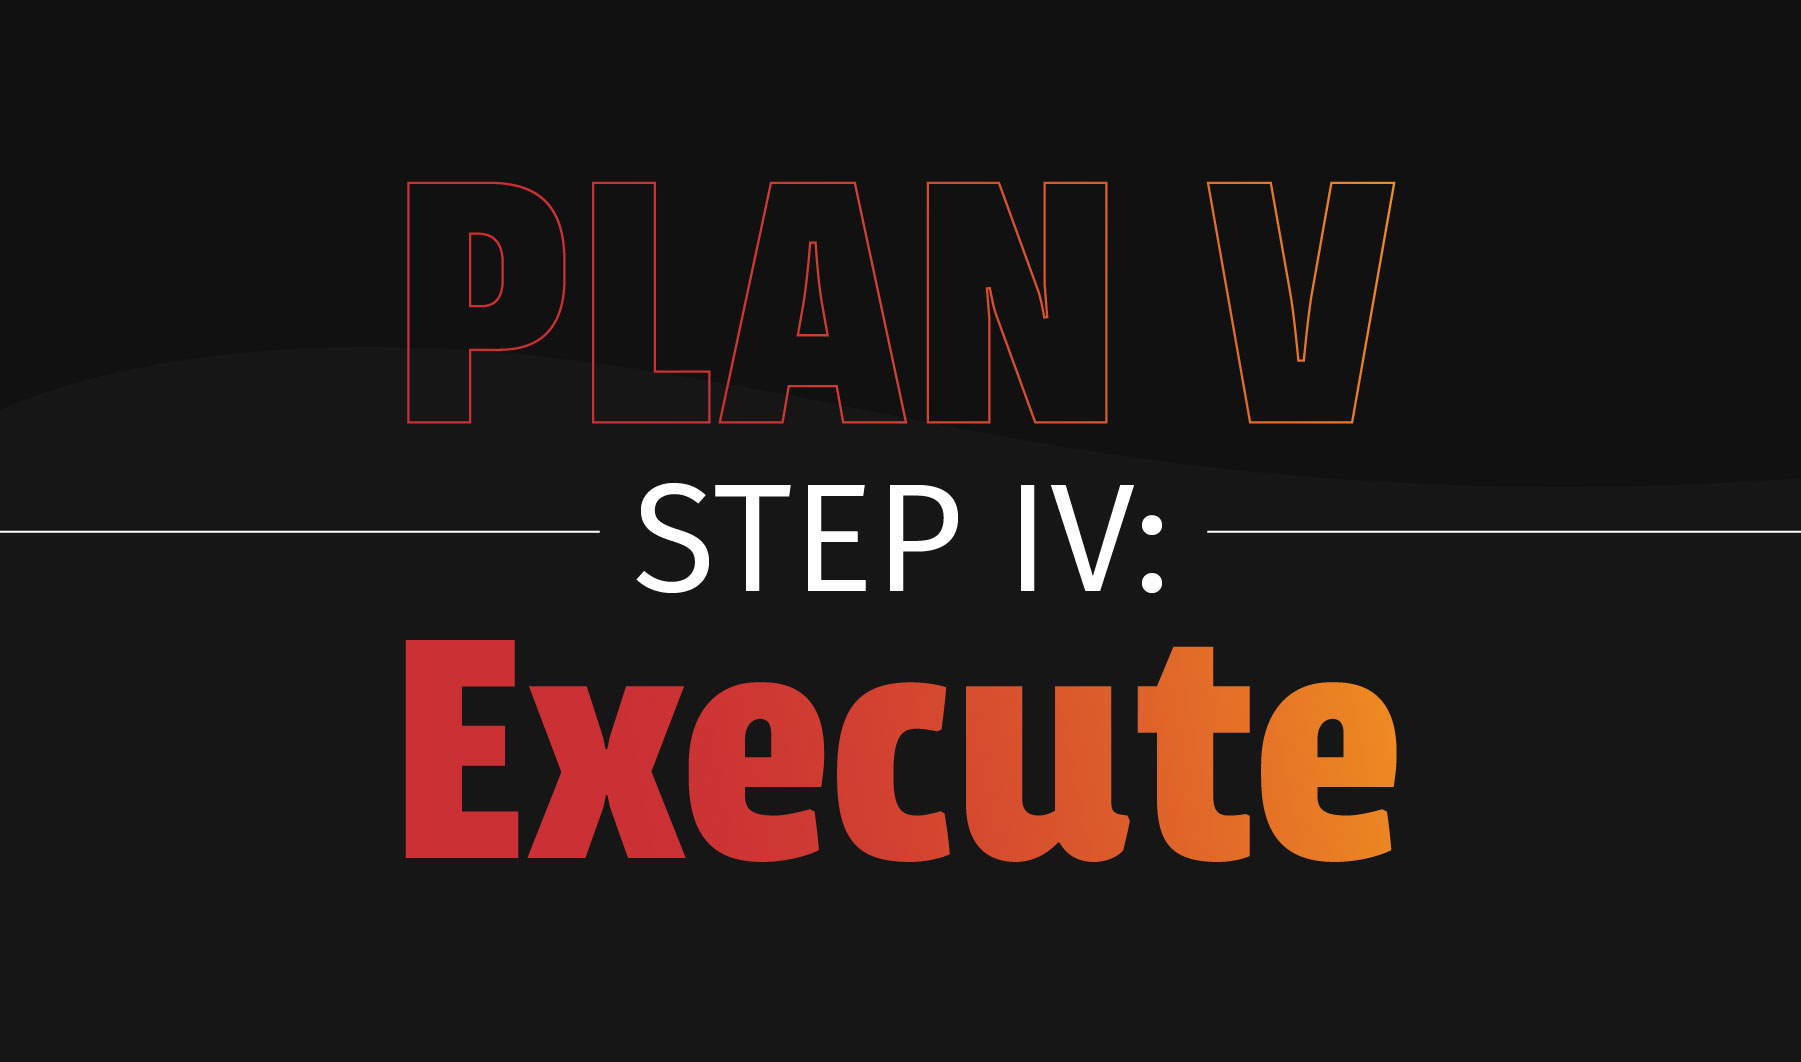 Plan V - Execute